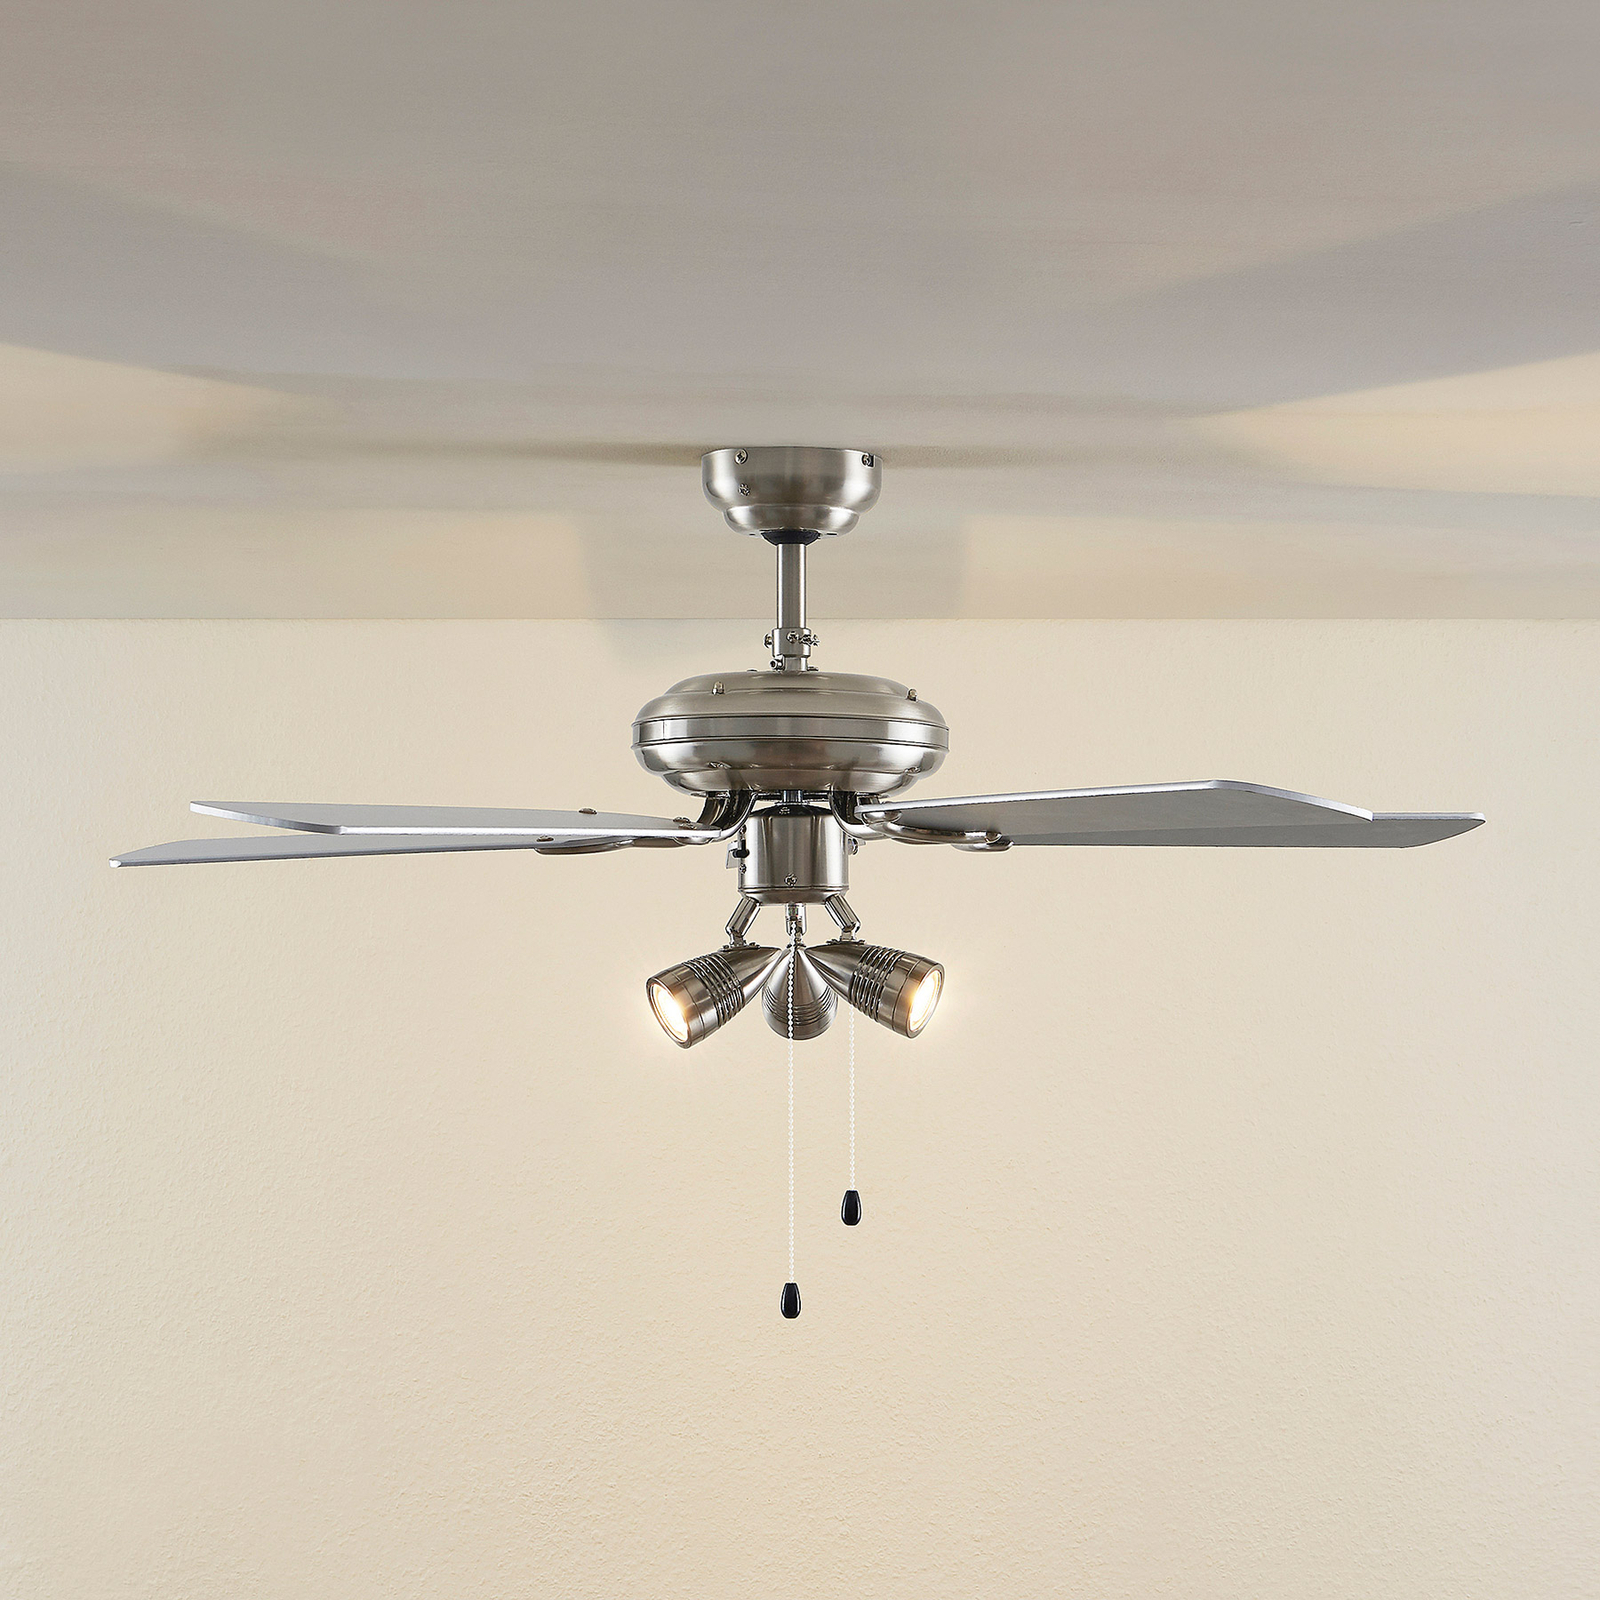 Starluna ceiling fan with light Anariki, quiet, silver